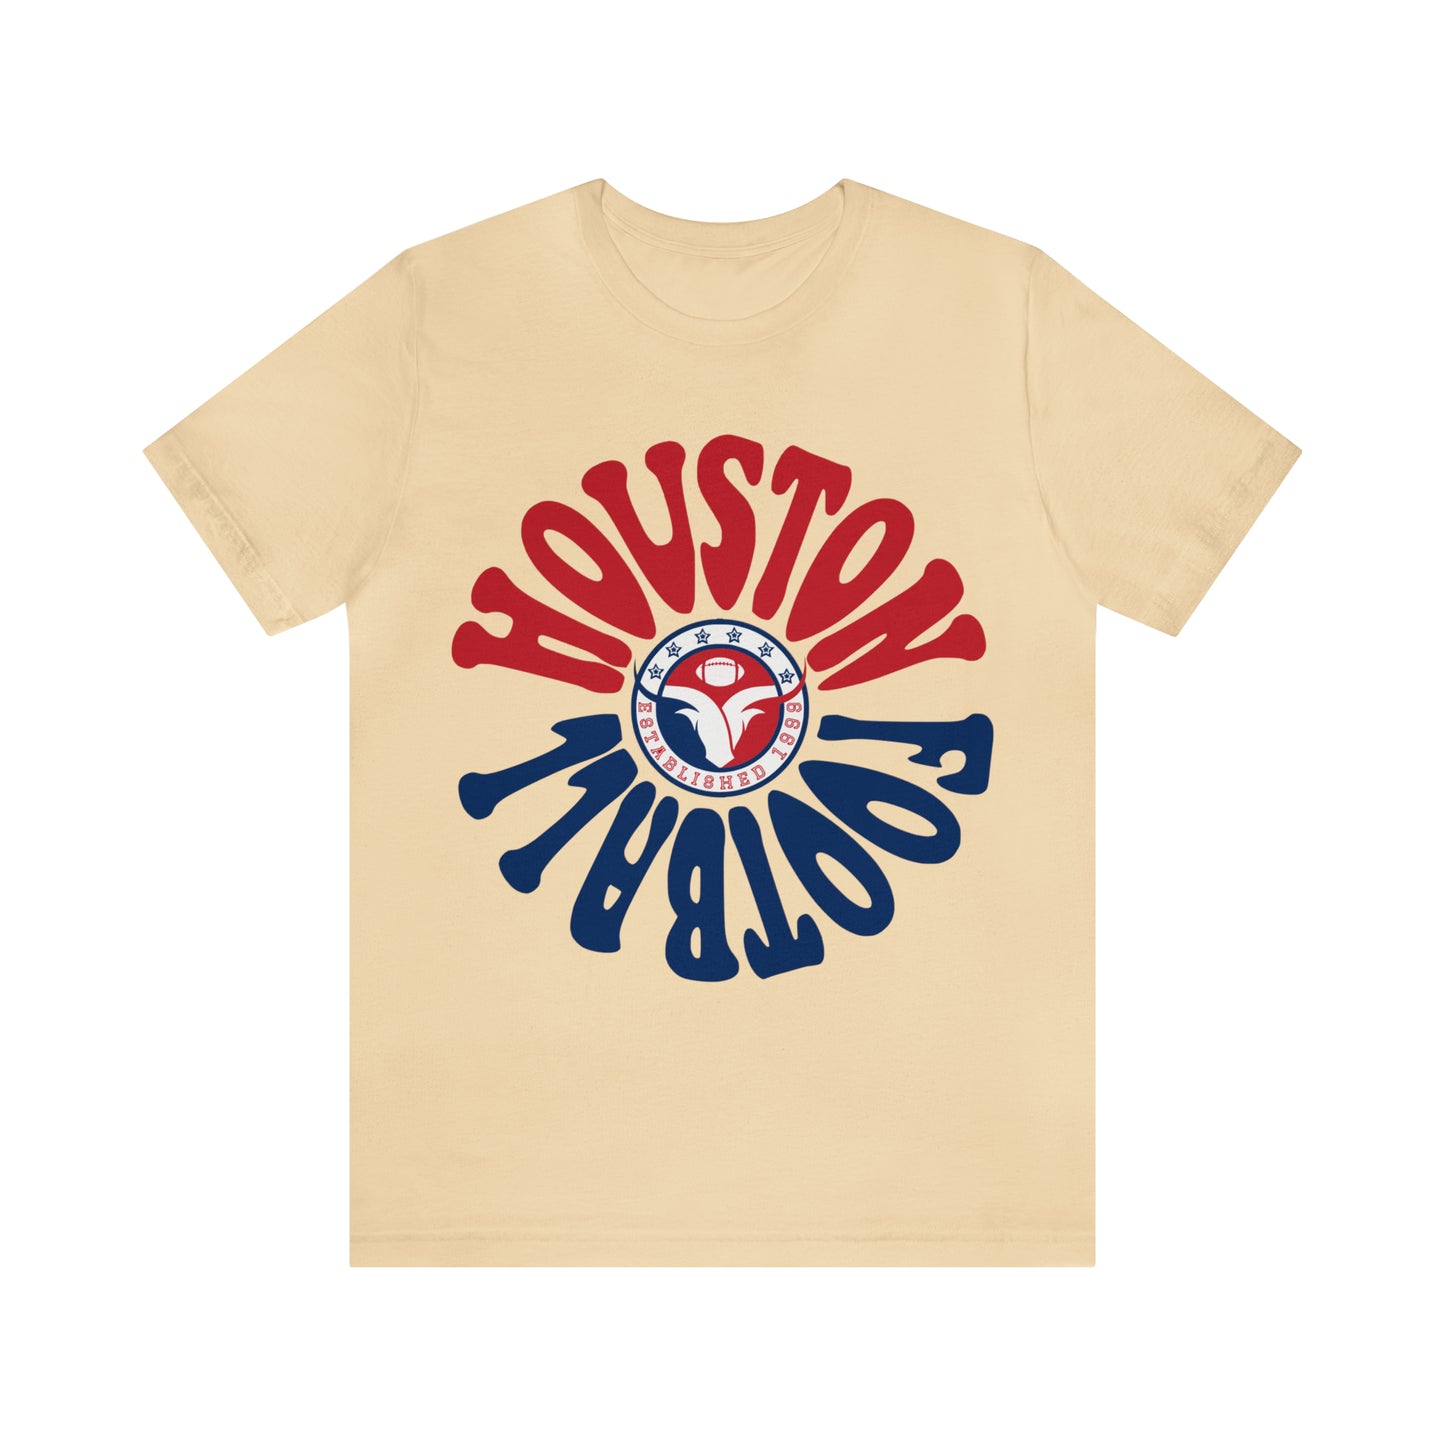 Hippy Houston Texans - Retro Houston Football Short Sleeve Shirt -  Men's Women's Kids Apparel - Design 2